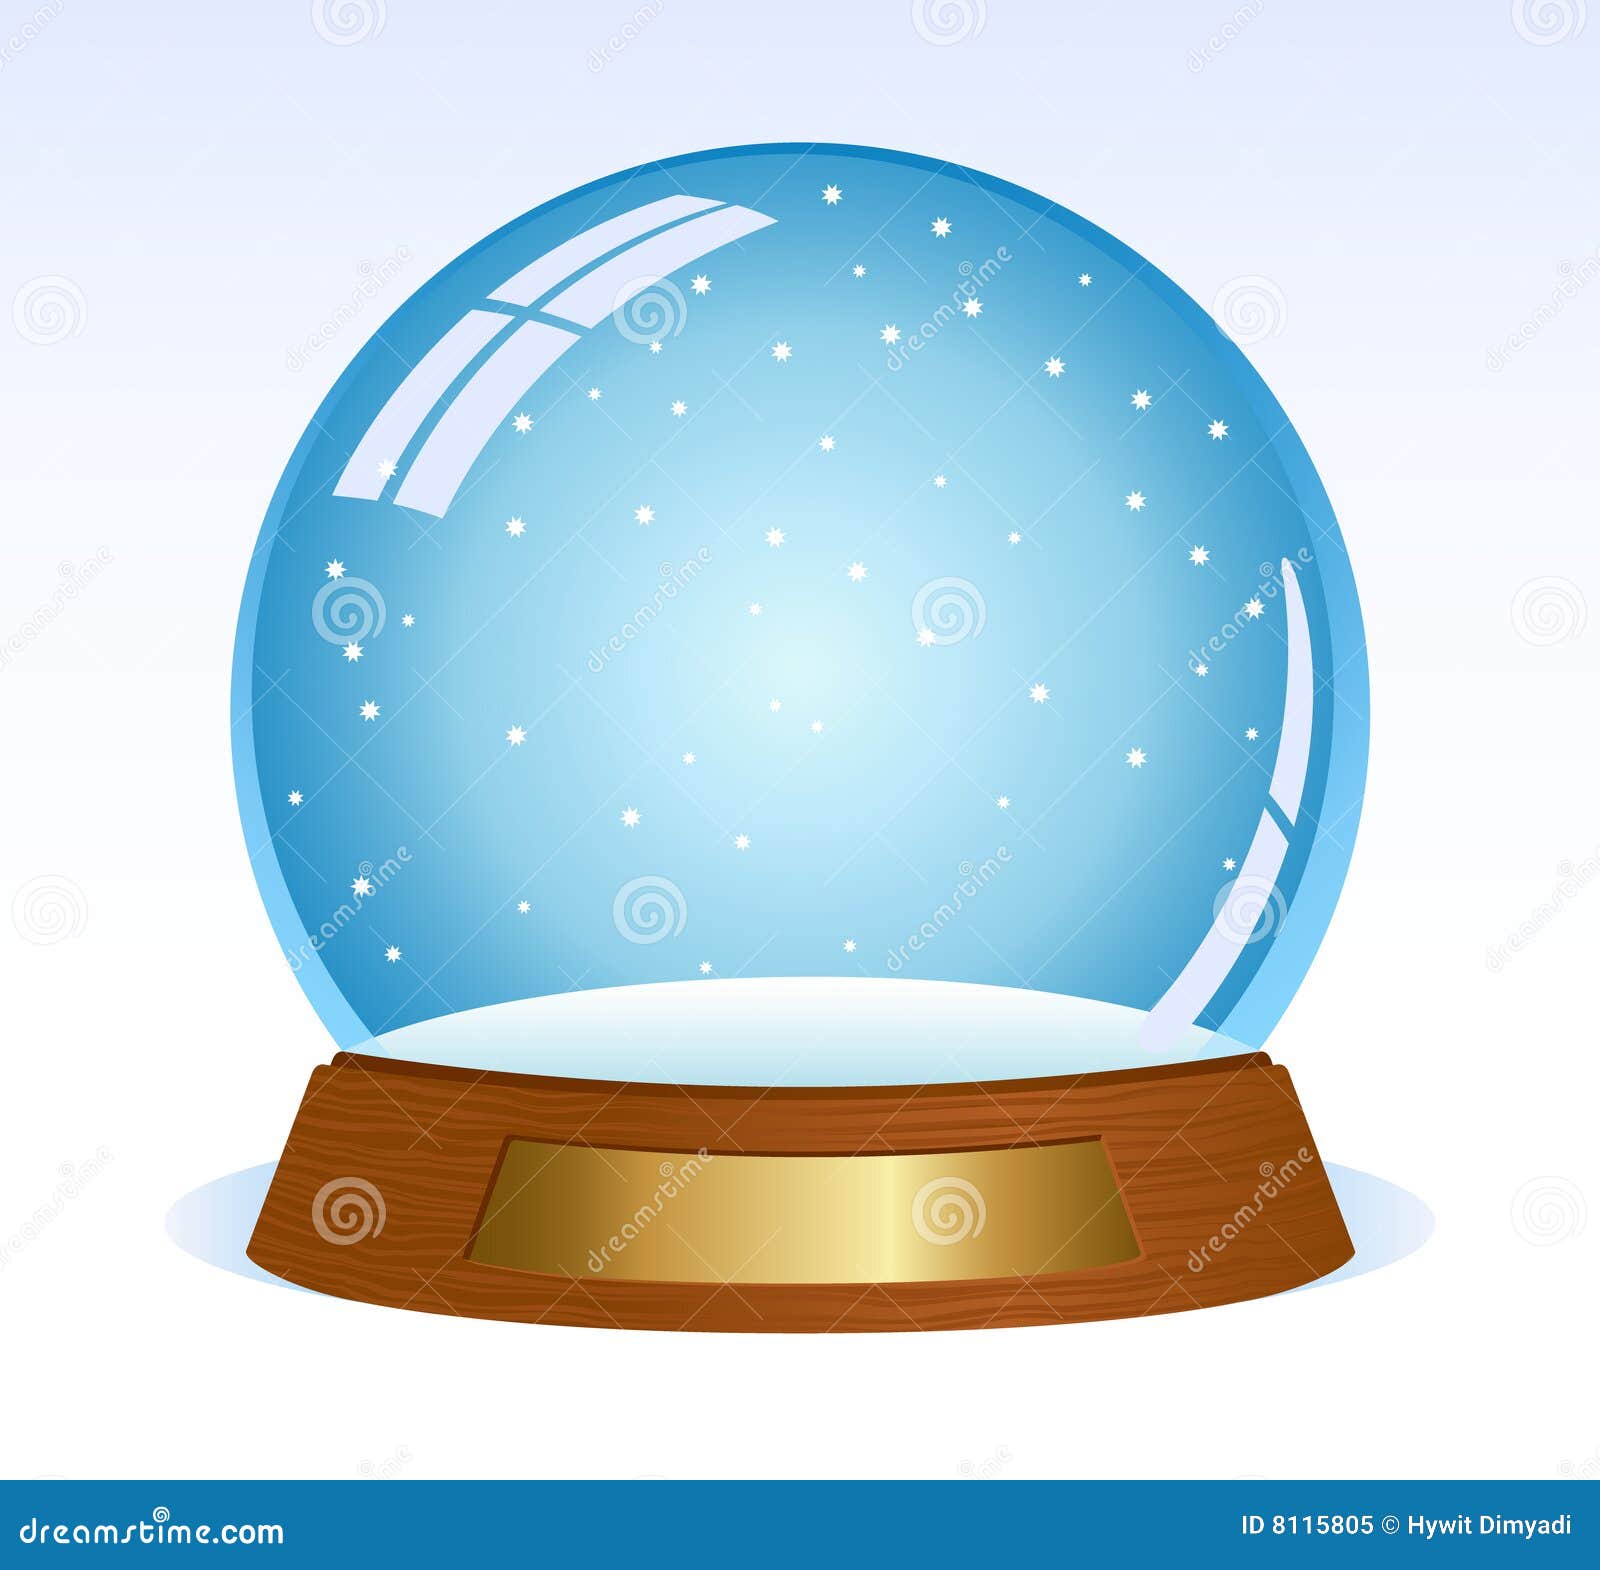 snow globe clipart free - photo #16